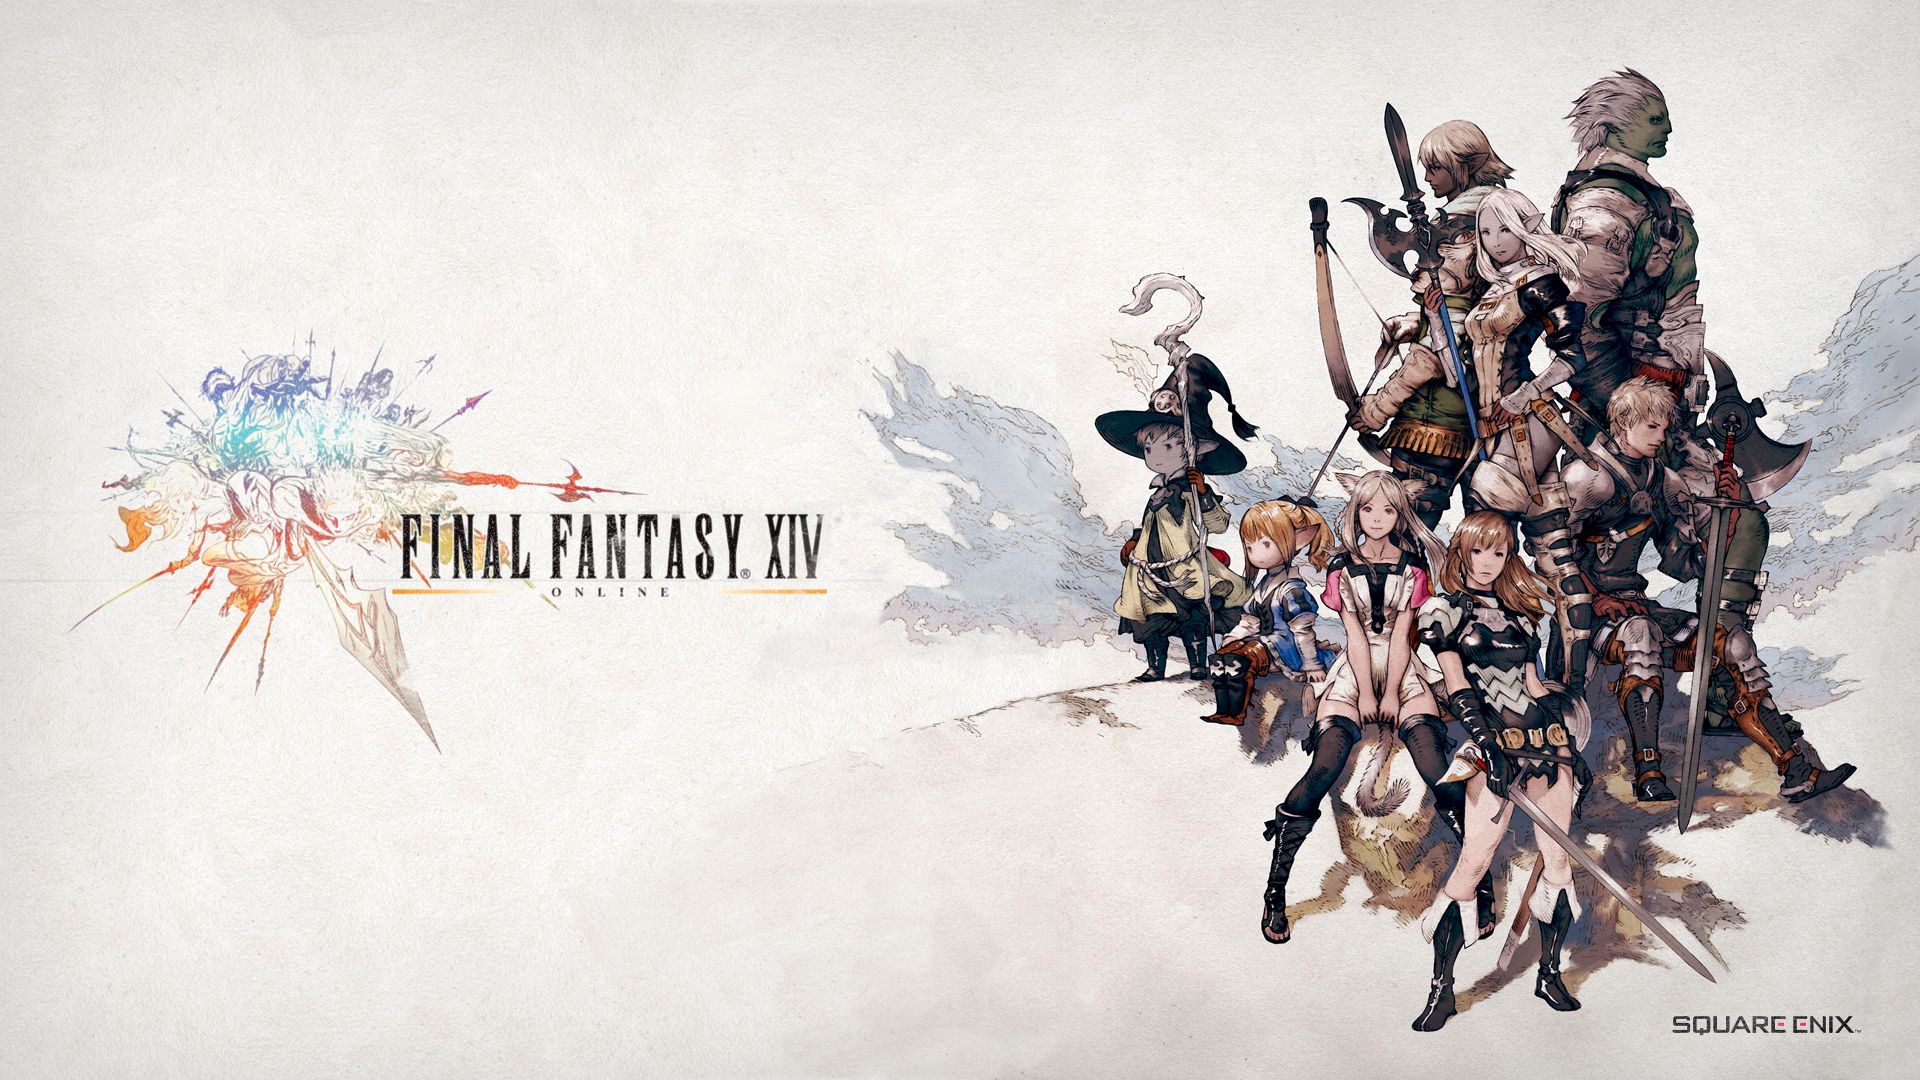 Final Fantasy Xiv A Realm Reborn Wallpaper